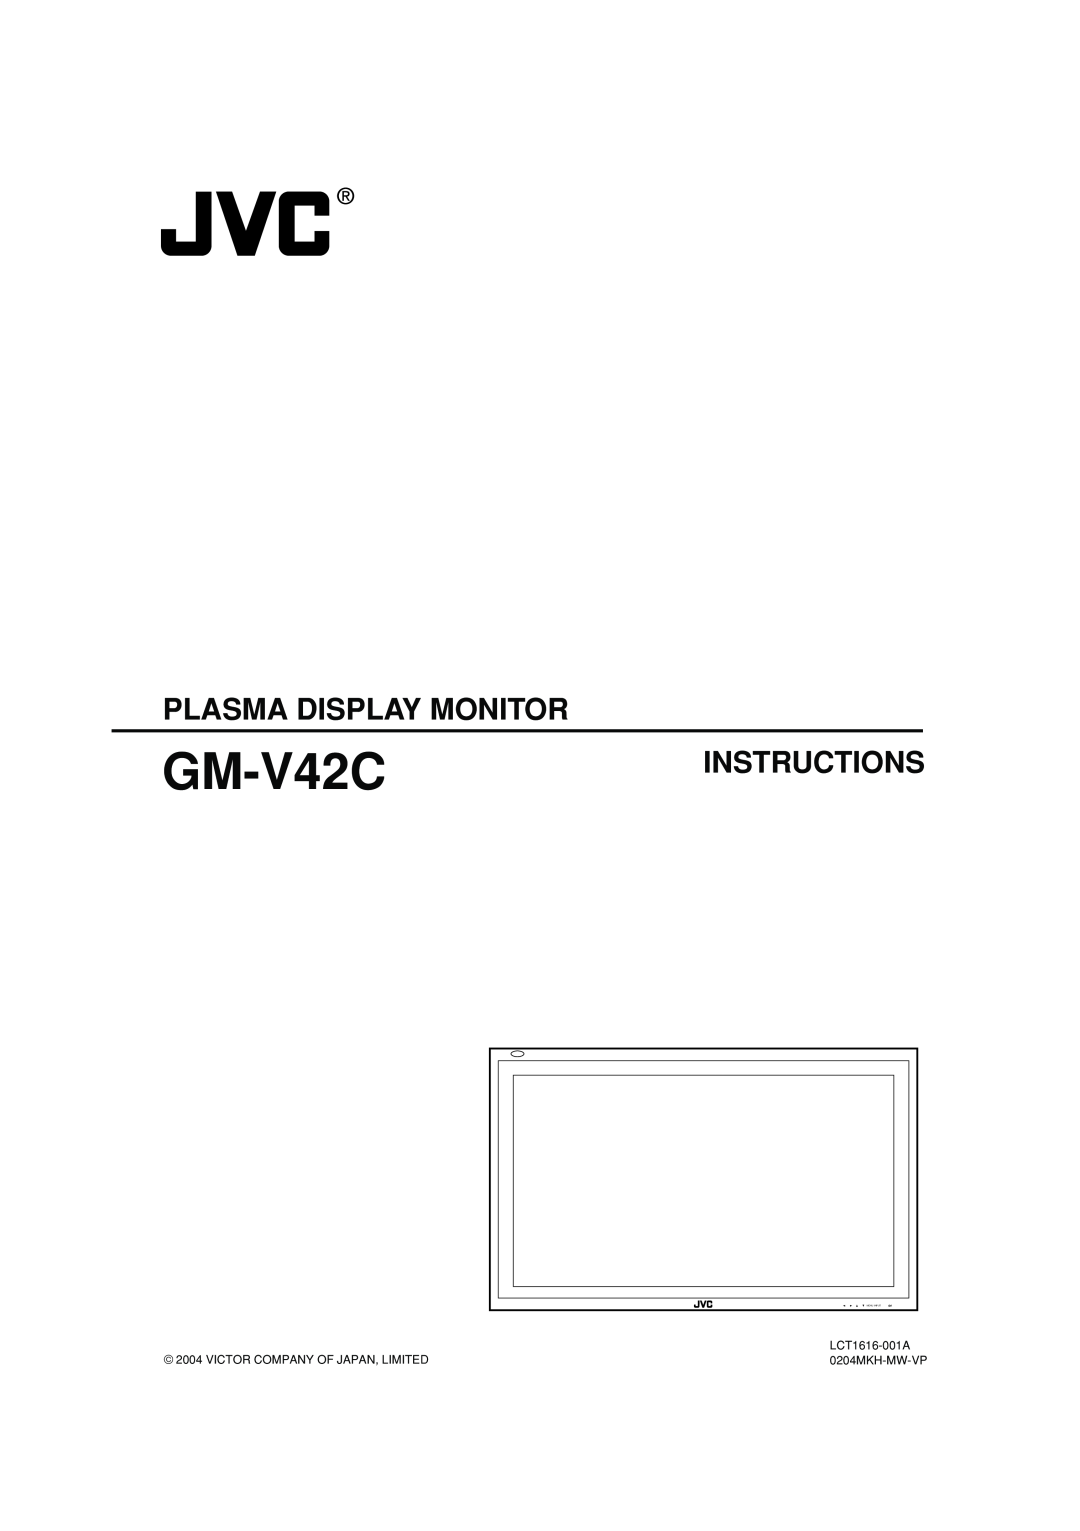 JVC manual PLASMA DISPLAY MONITOR GM-V42CINSTRUCTIONS, LCT1616-001A, Victor Company Of Japan, Limited, 0204MKH-MW-VP 